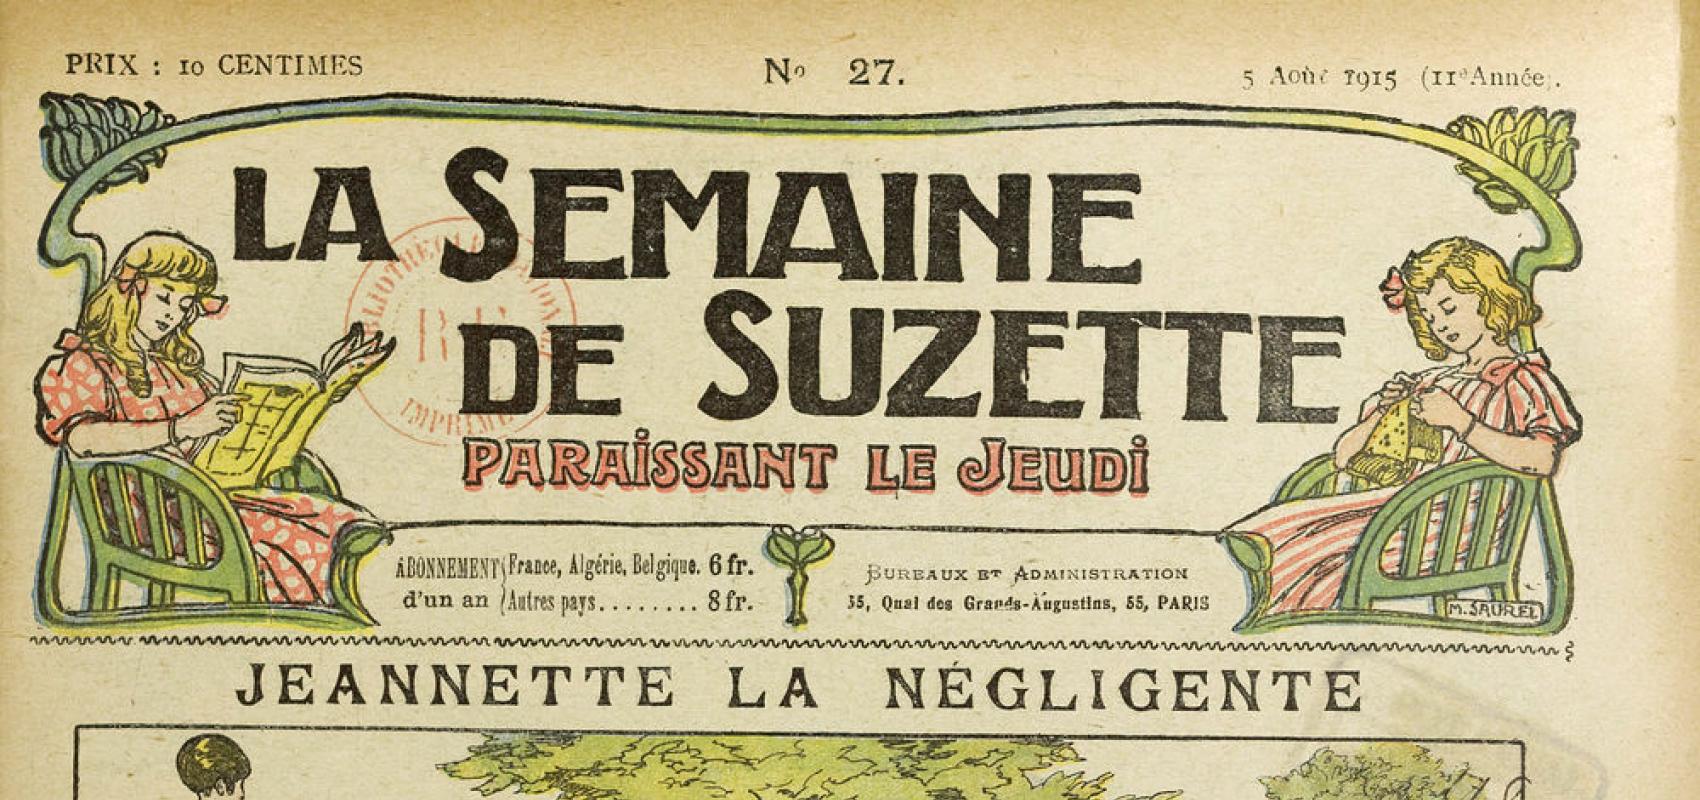 La semaine de Suzette – 5 août 1915 -  - https://gallica.bnf.fr/ark:/12148/bpt6k993443k